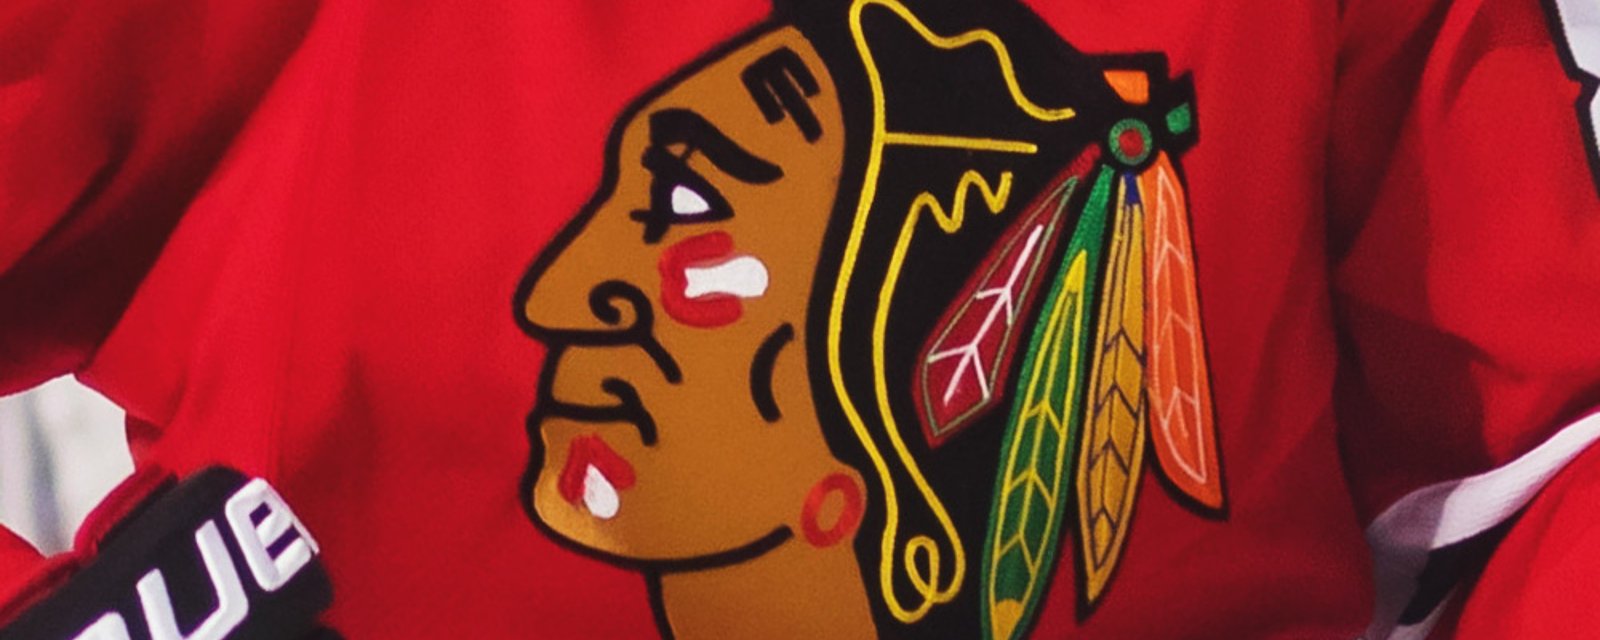 Controversy arises around the Chicago Blackhawks jersey at one prestigious University.